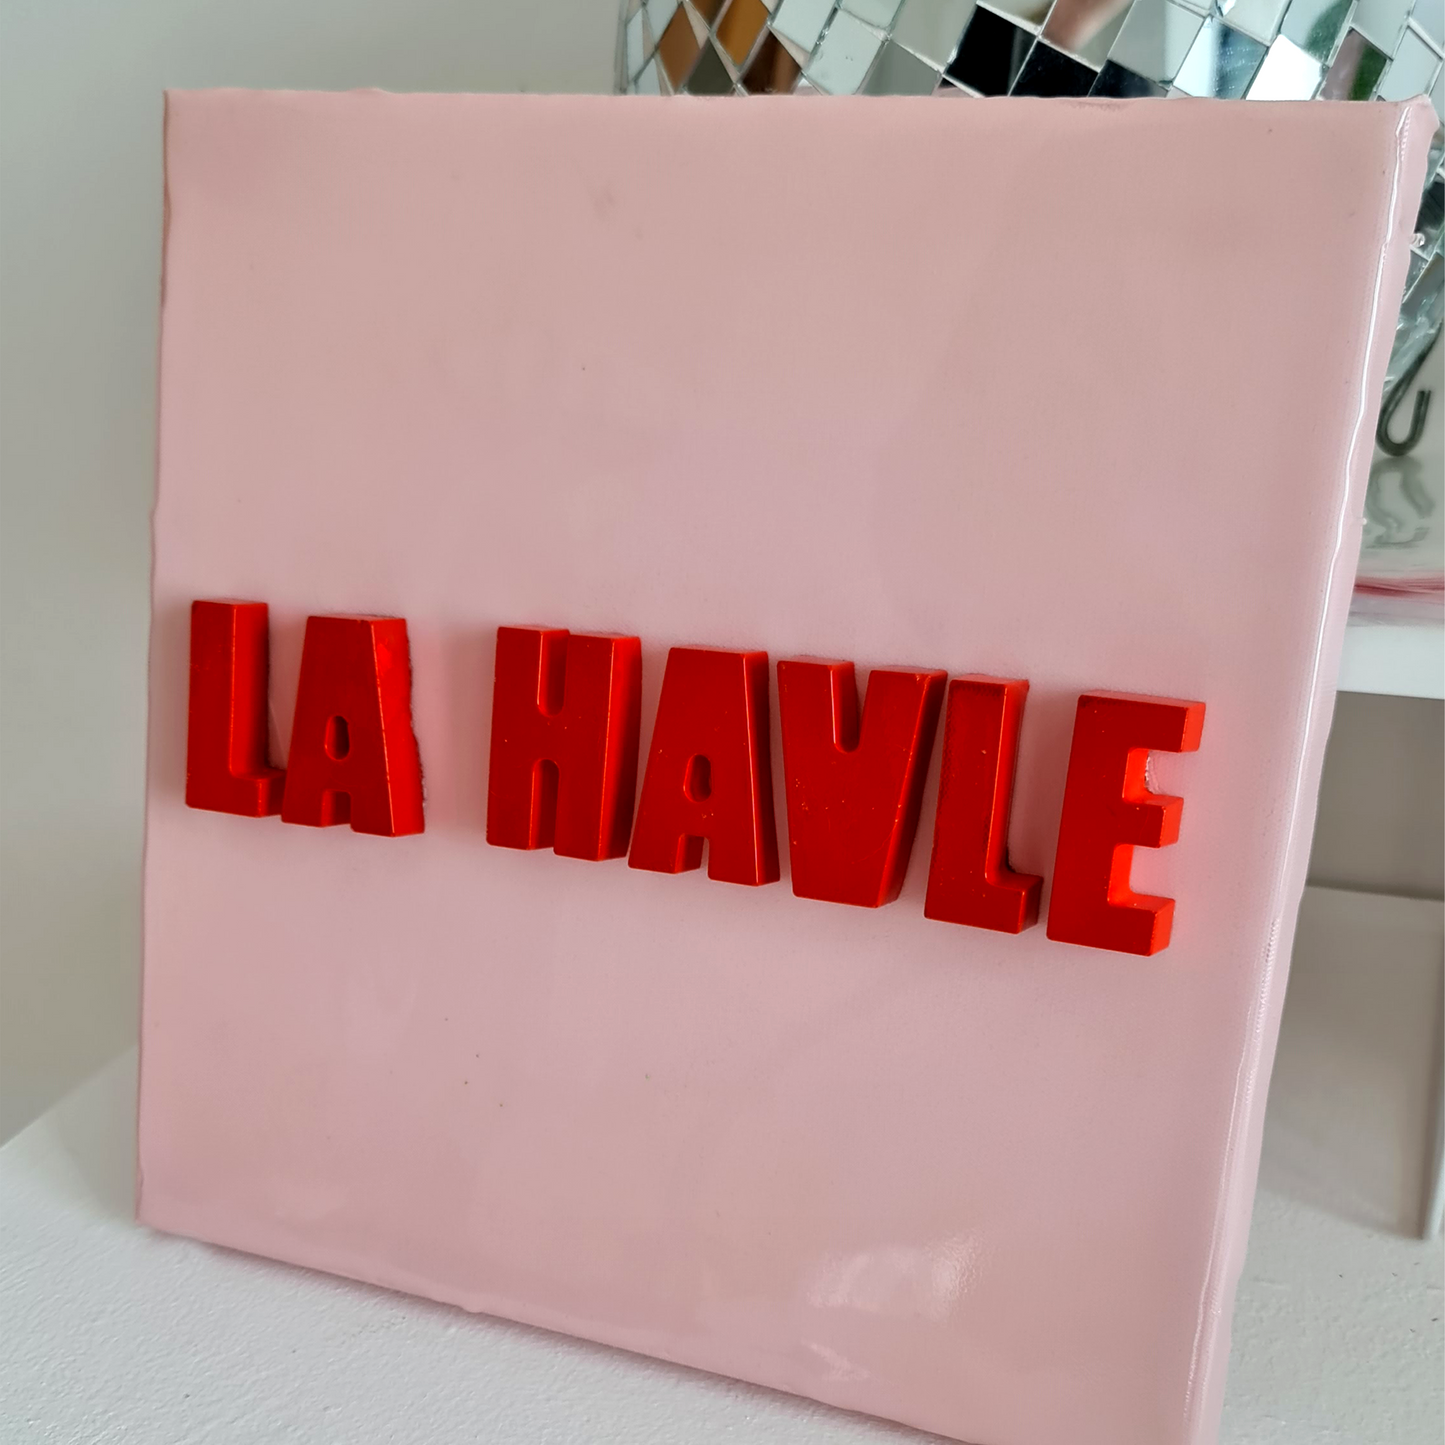 La Havle 30x30cm (Soft Pink Tuval & Red Yazı)